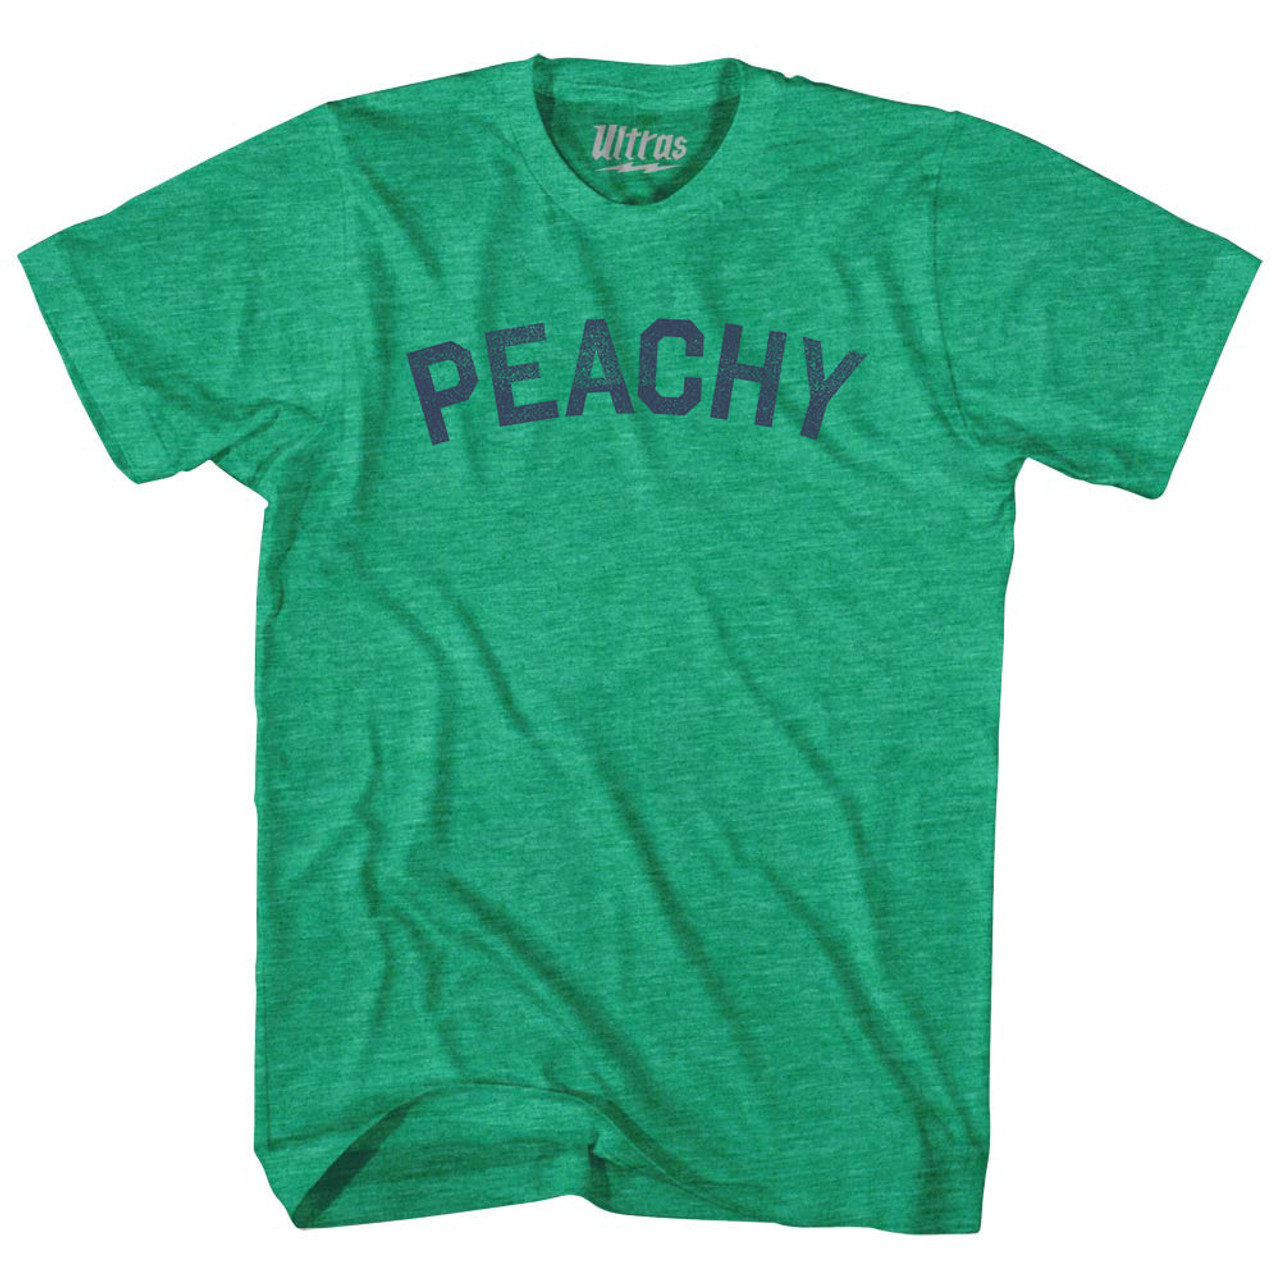 Peachy Athletic